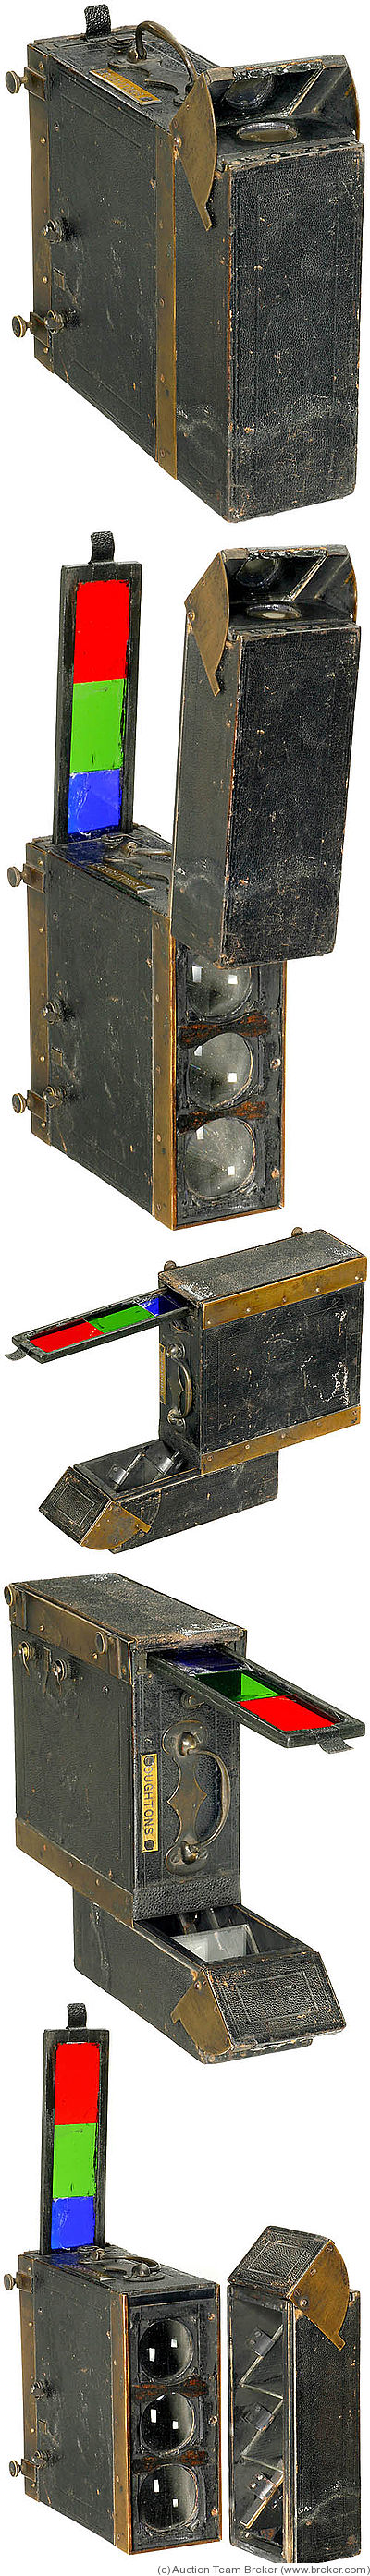 Lesueur & Ducos du Hauron: Le Melanochromoscope (three-color) camera